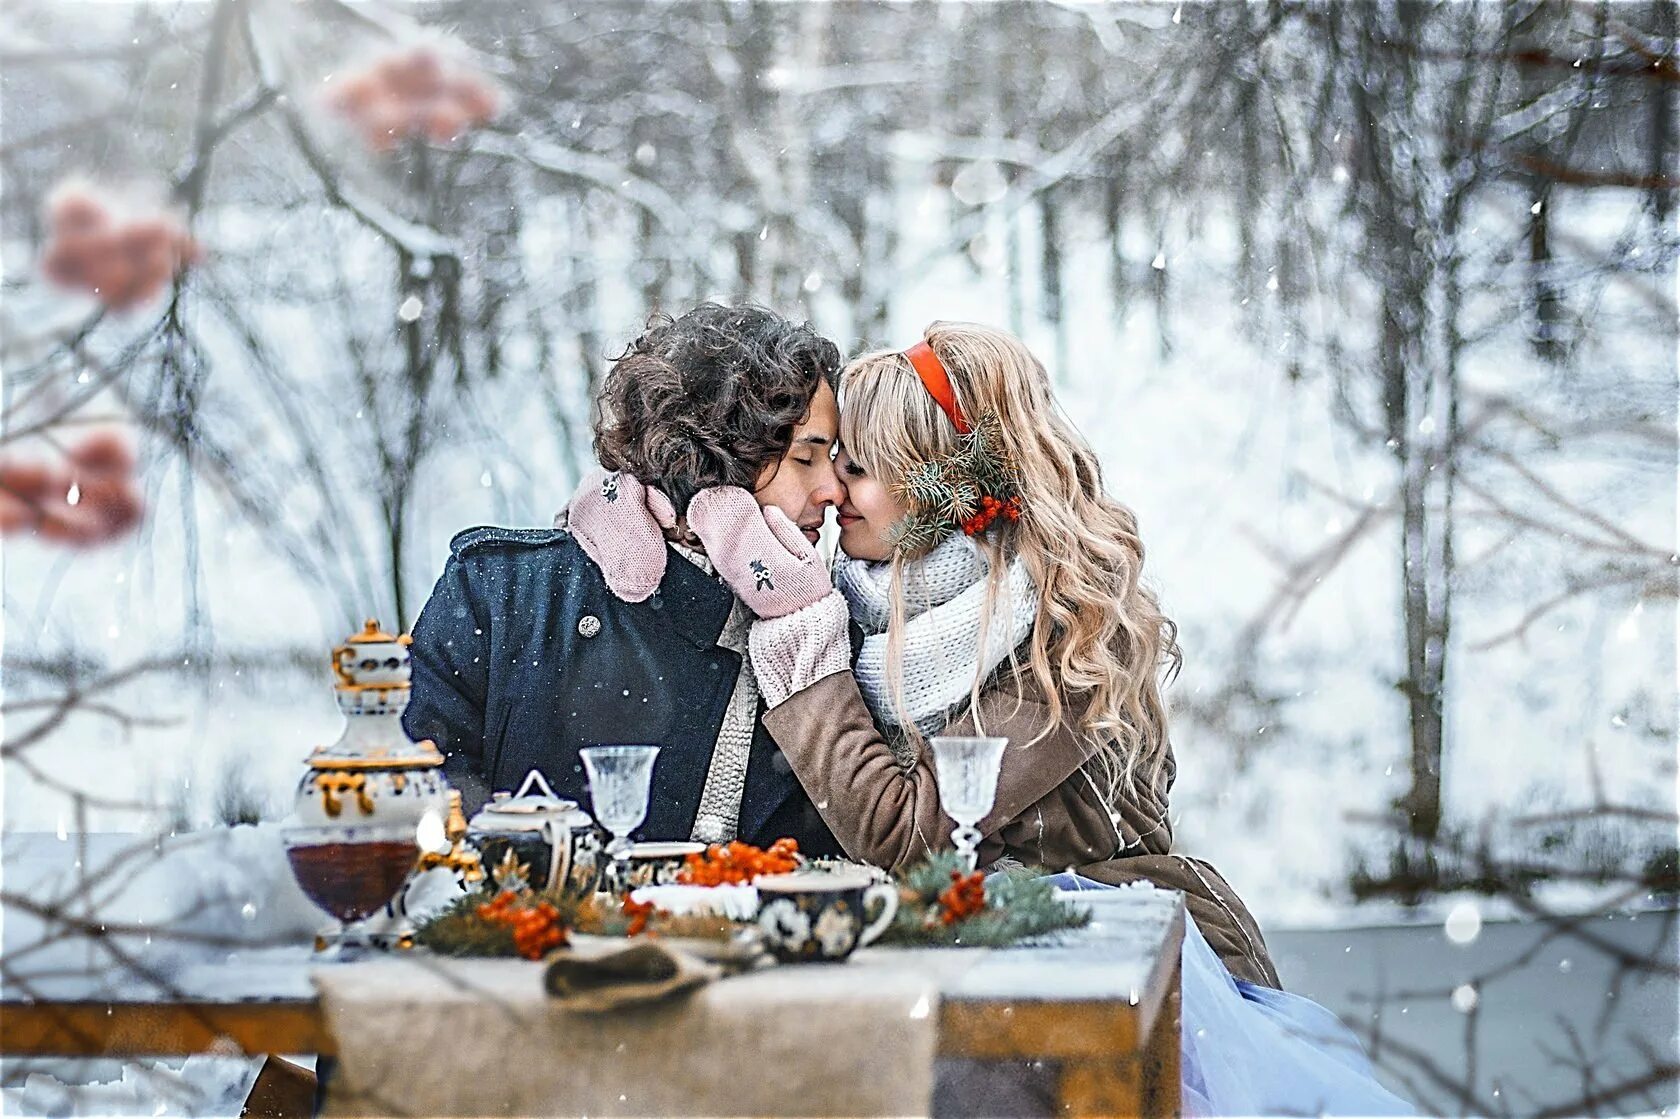 Первые романтики. Романтика зимой. Зима любовь. Влюбленные зима. Романтик на природе зимой.